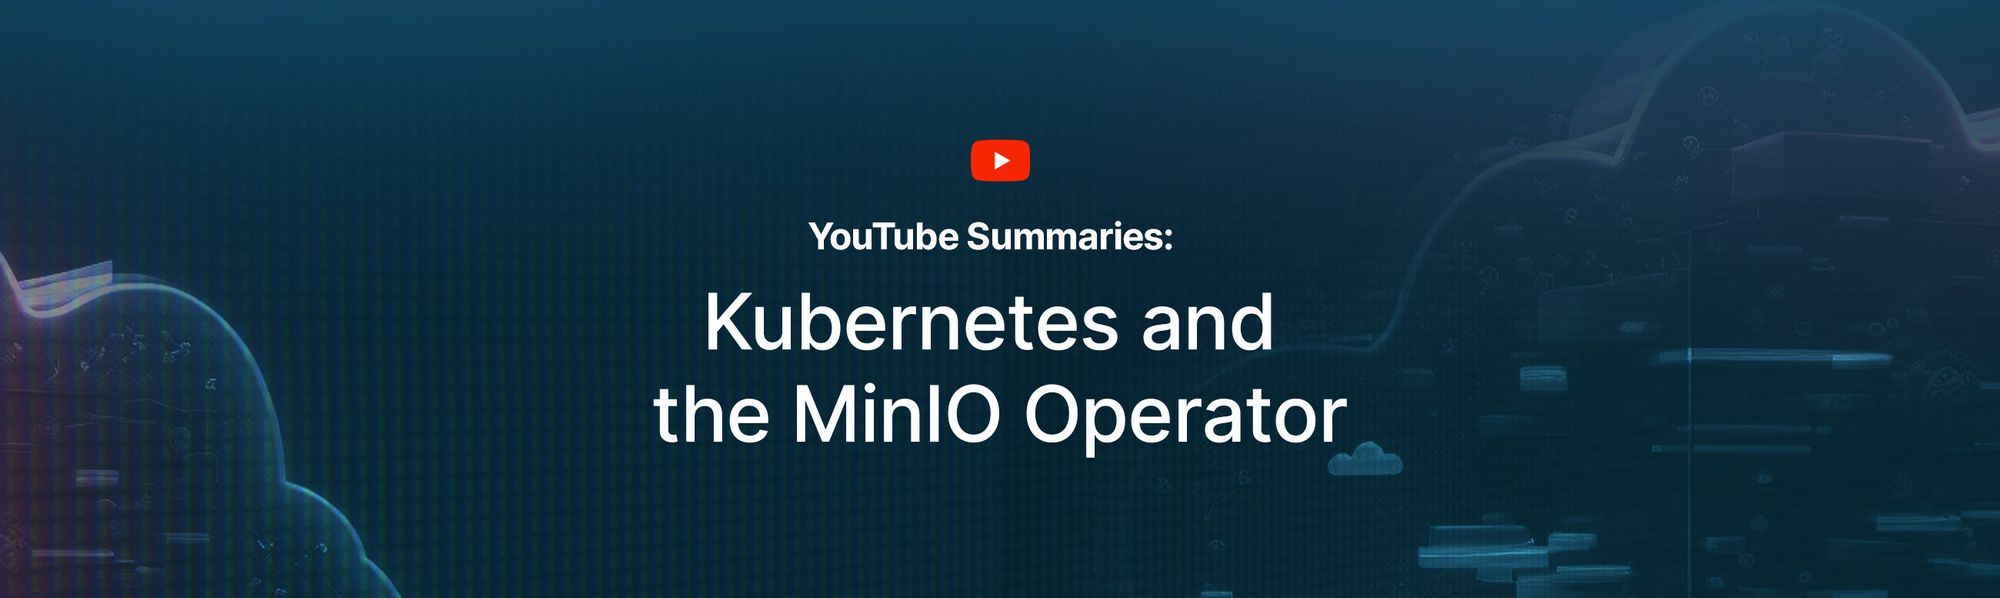 YouTube Summaries: Kubernetes and the MinIO Operator